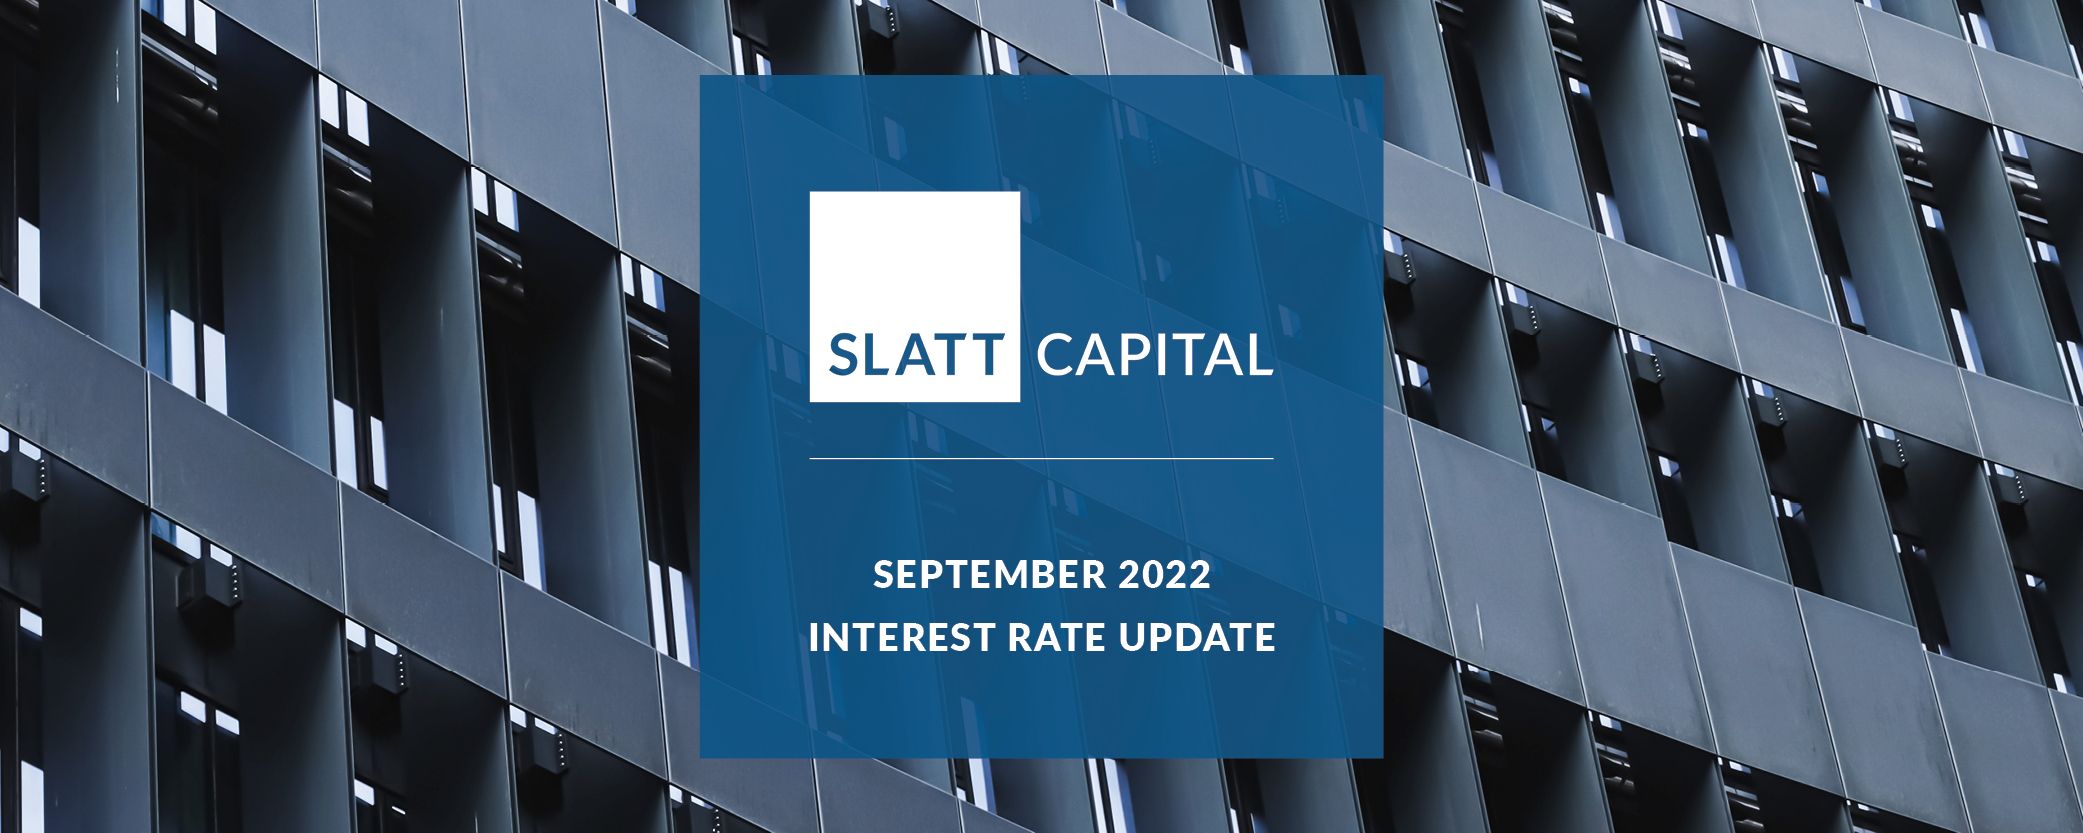 September interest rate update